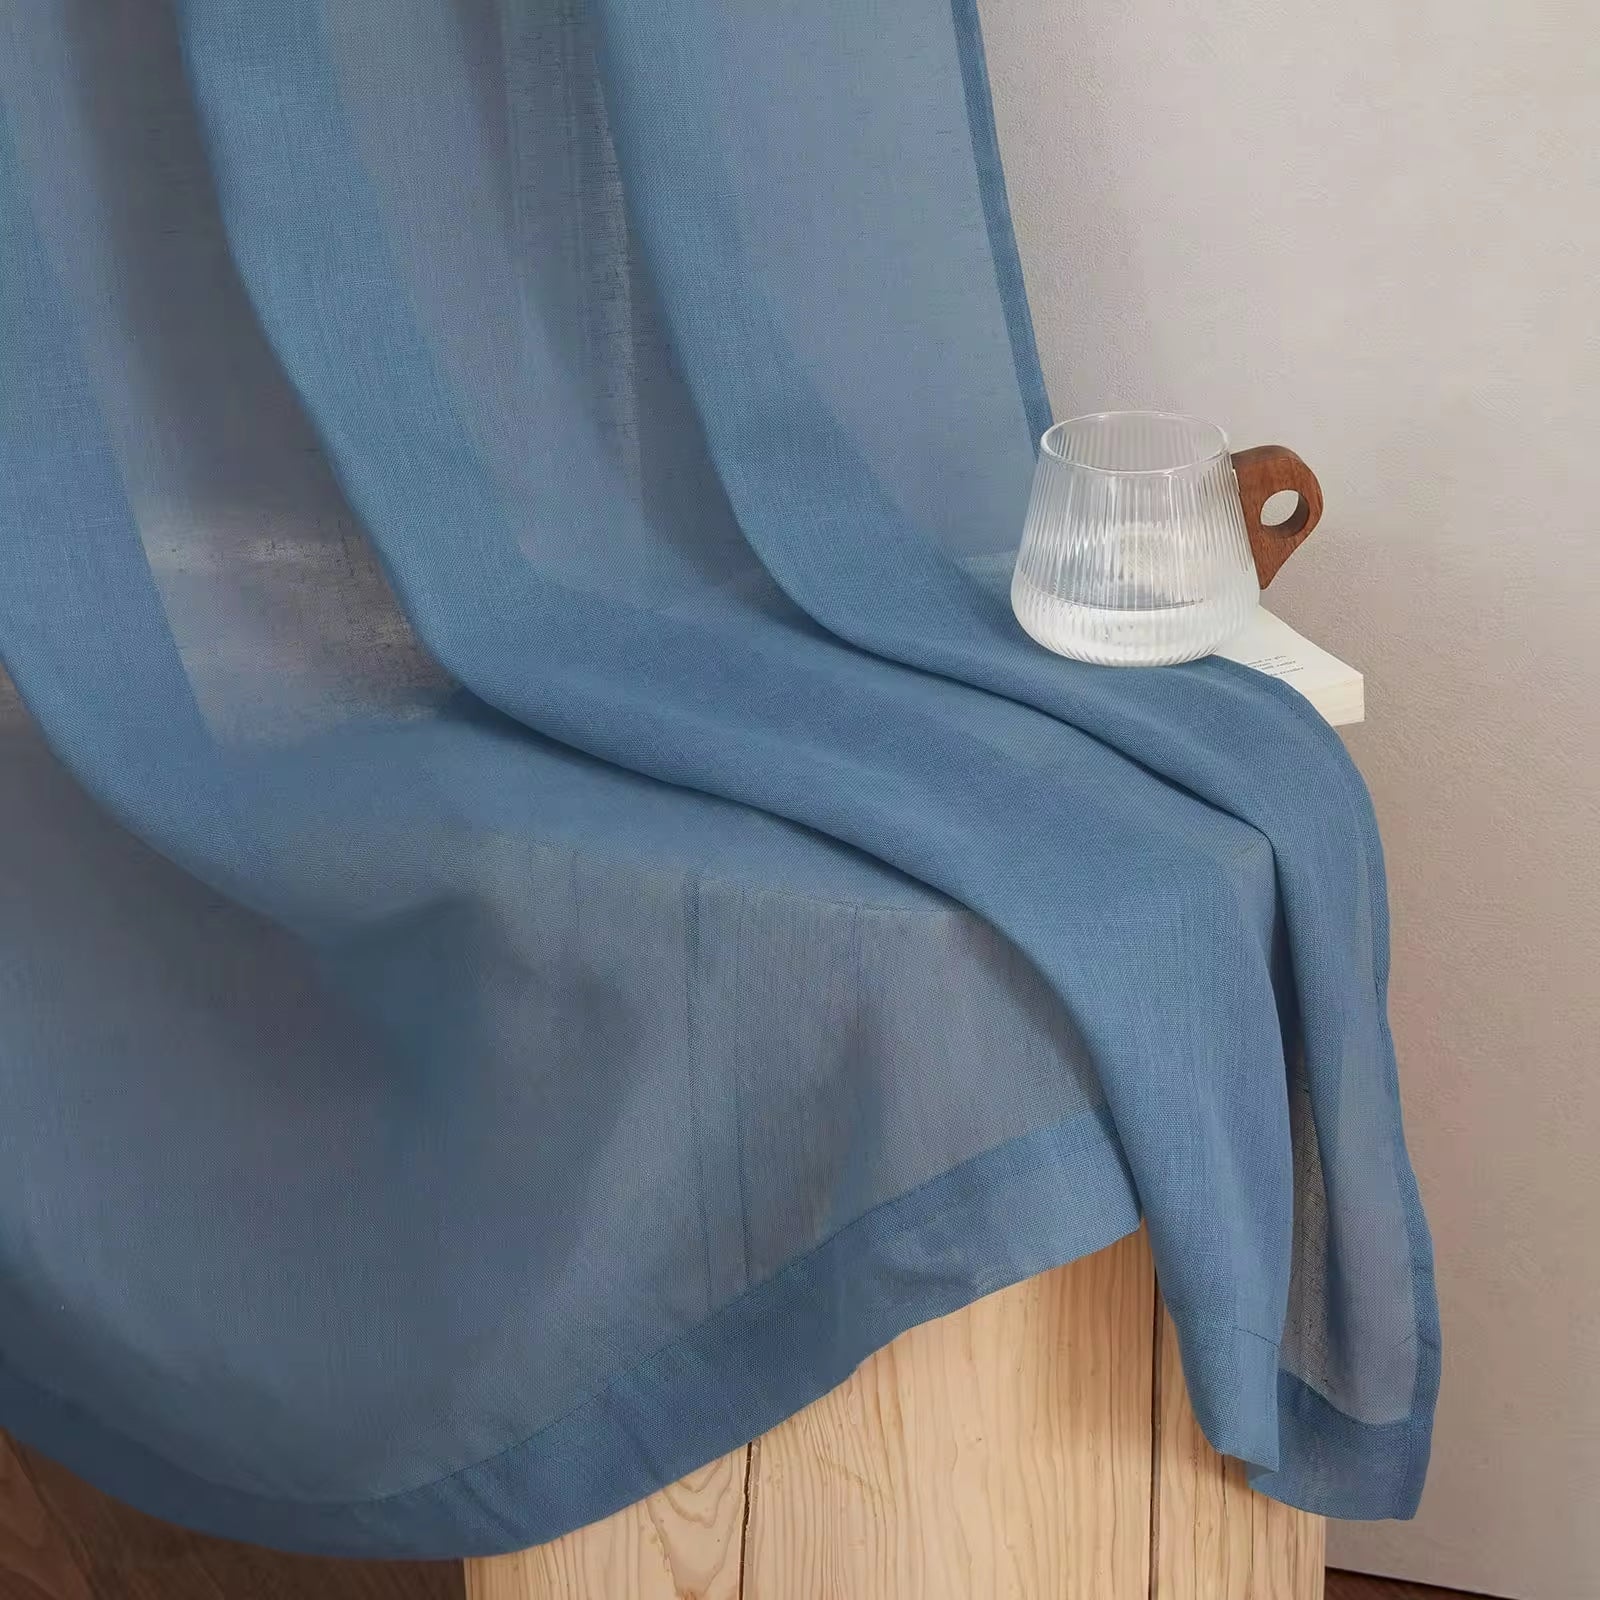 Bindi Grommet Vertical Drapes Flax Linen Blue Semi Sheer Curtains for Living Room